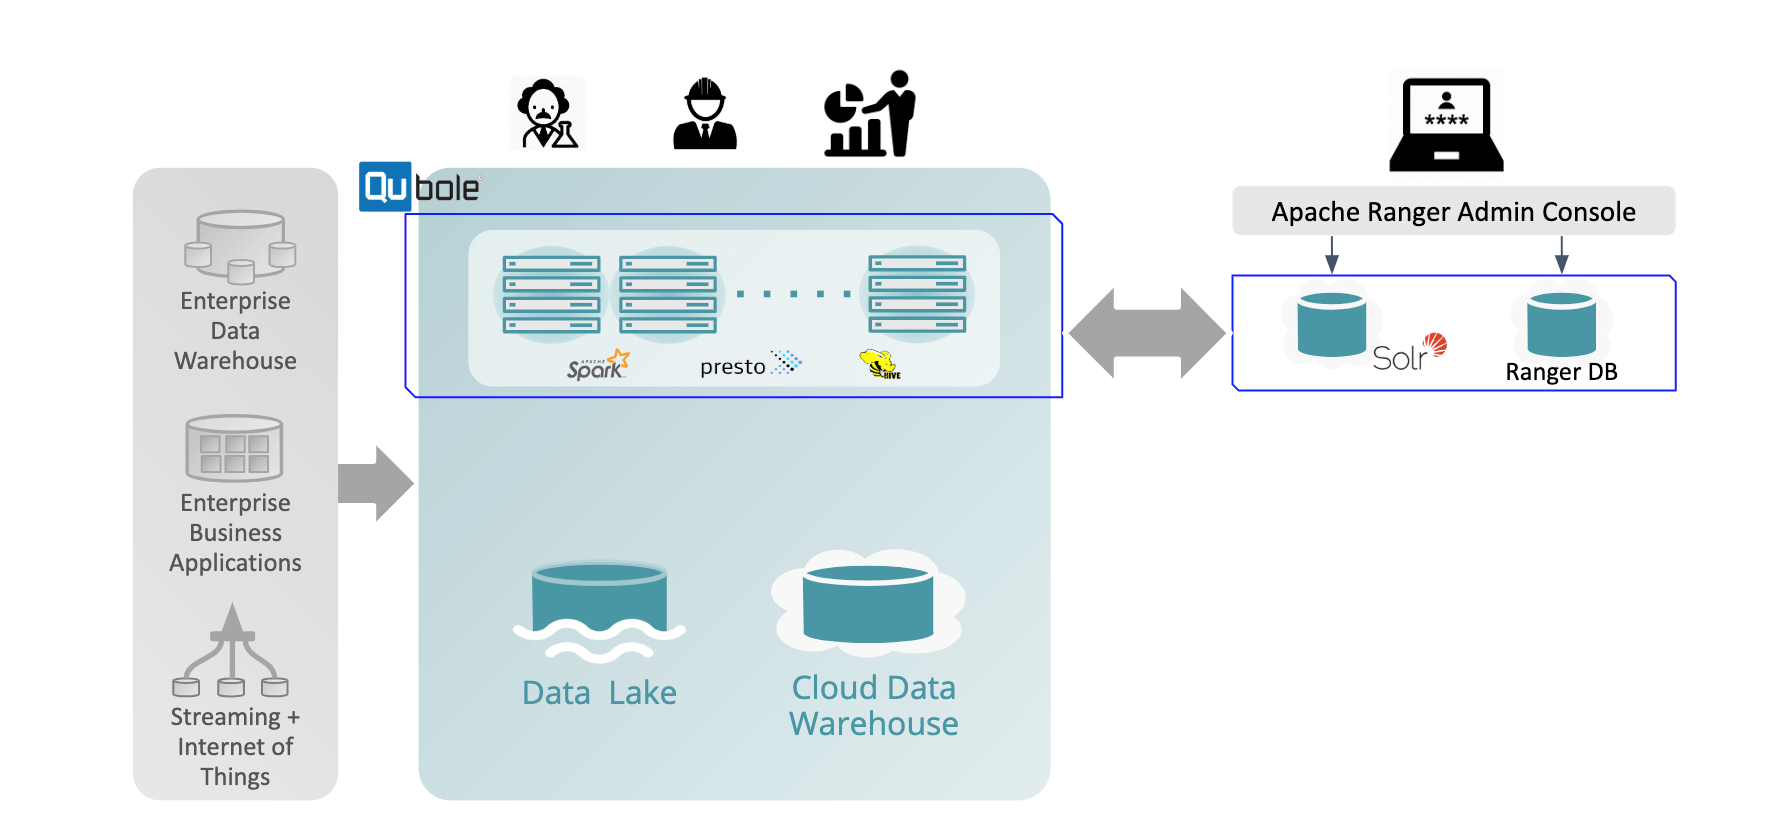 Data Lake Physical Storage Image 2